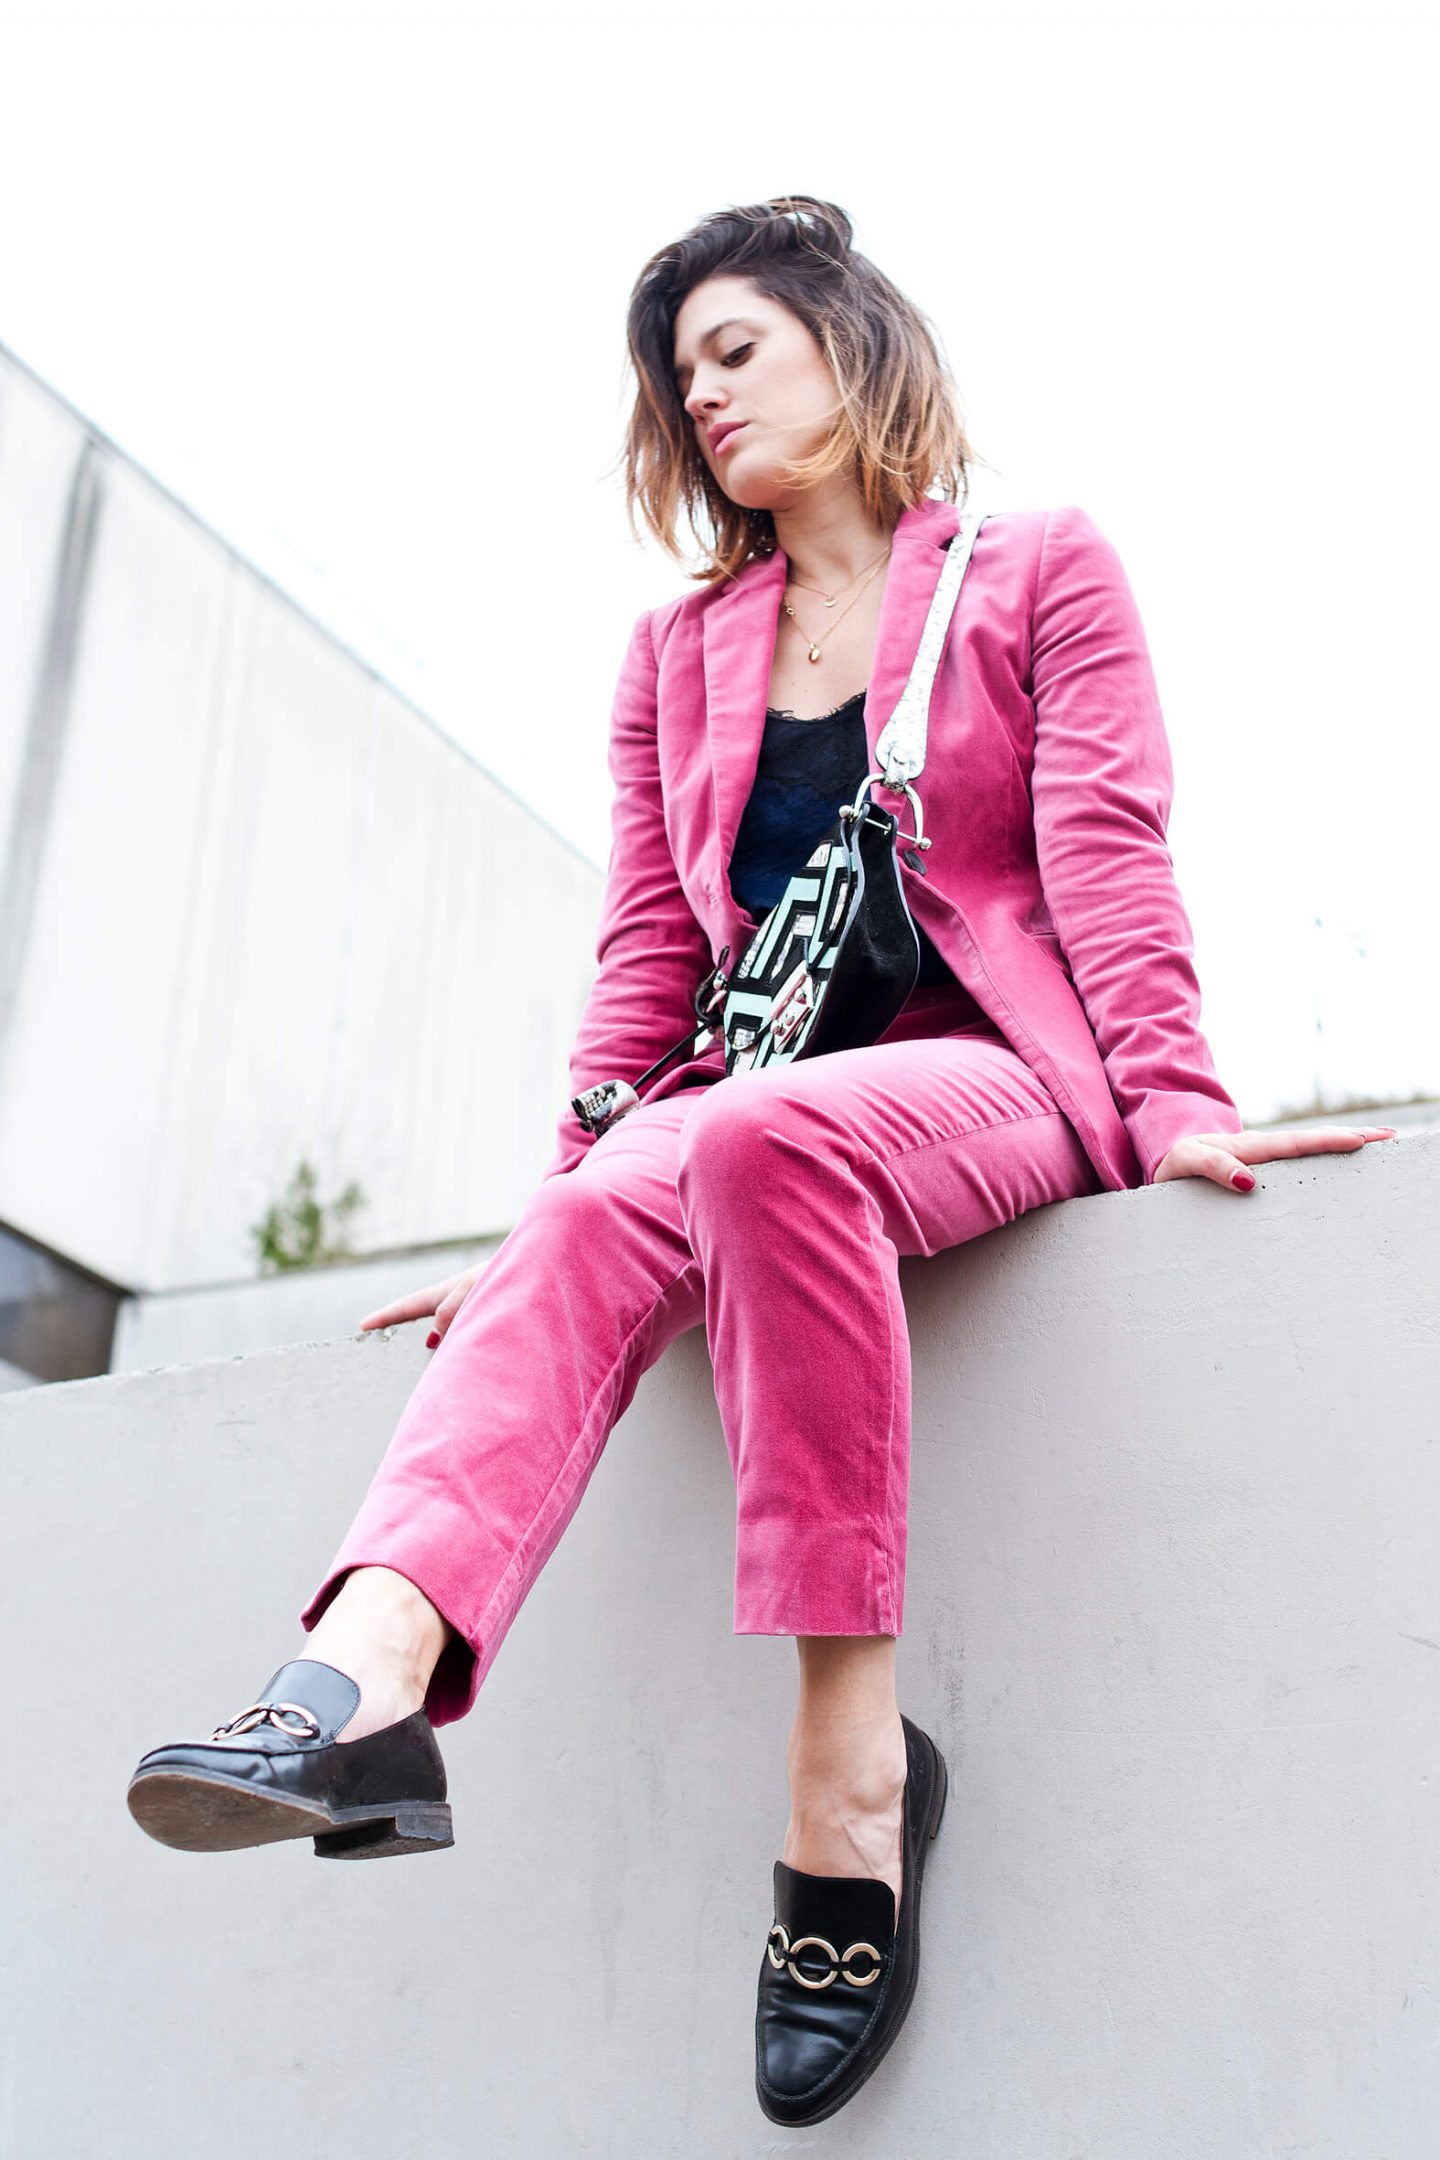 Look Paris Costume Boden rose L'atelierd 'al blog mode lifestyle DIY